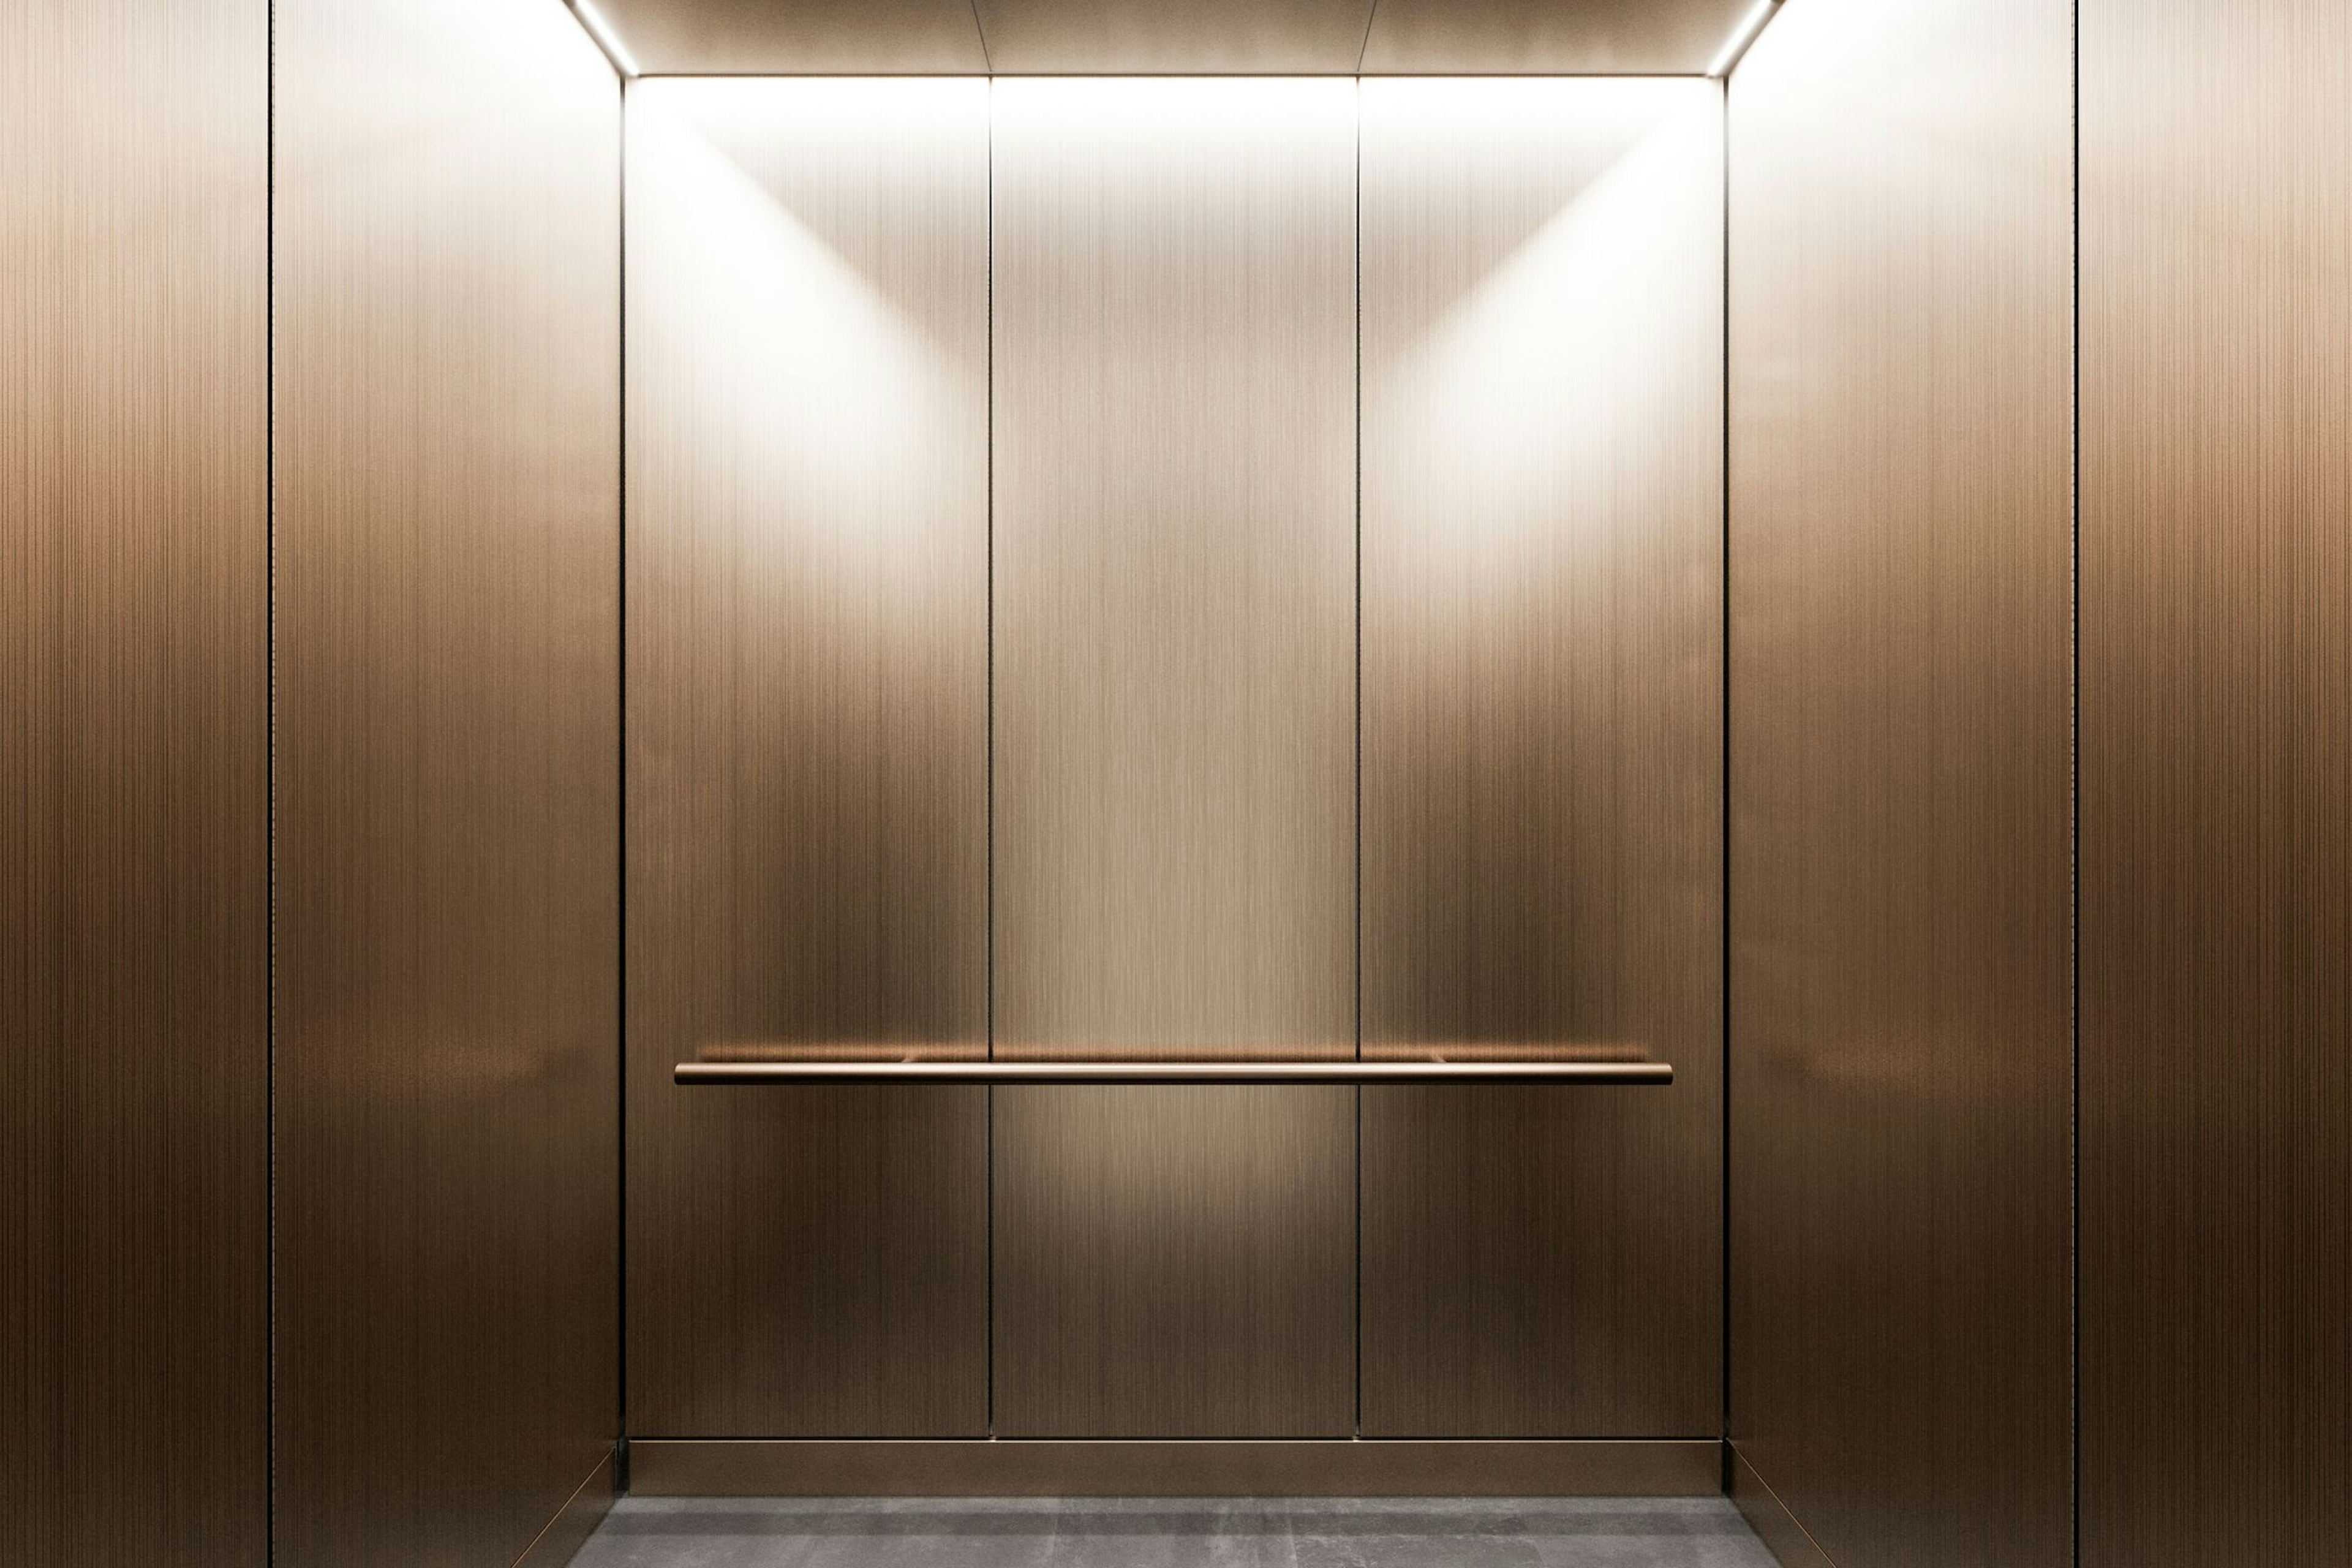 LEVELc-1000 Elevator Interiors: undefined